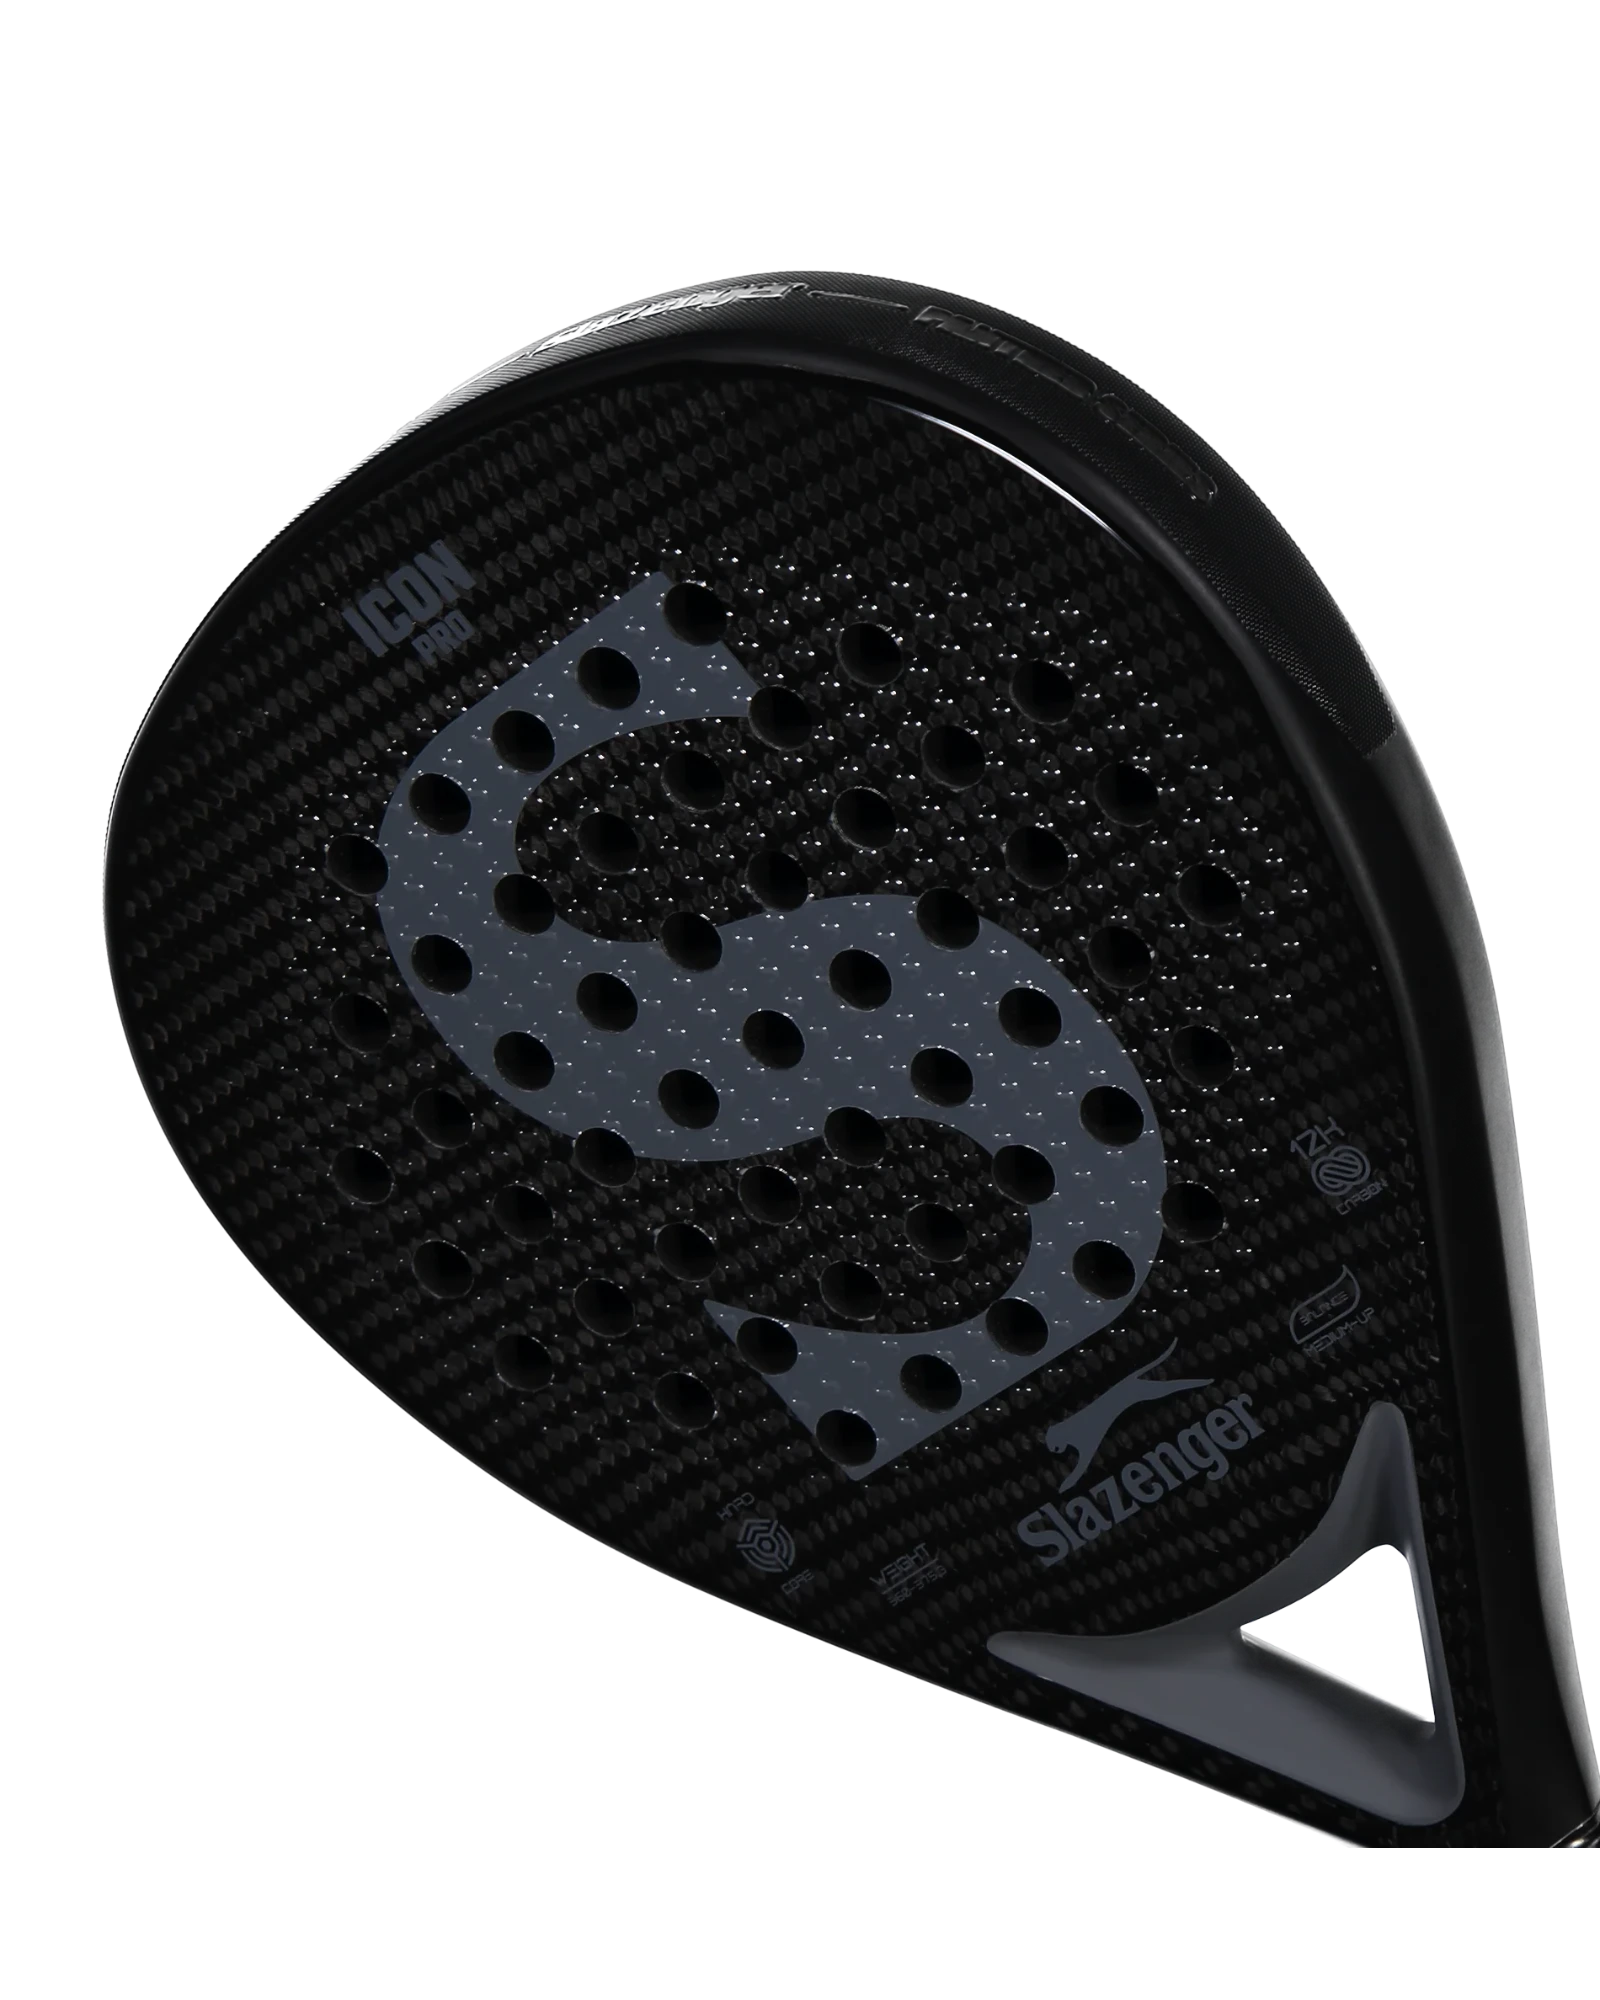 The Slazenger Panther Icon Pro Padel Racket